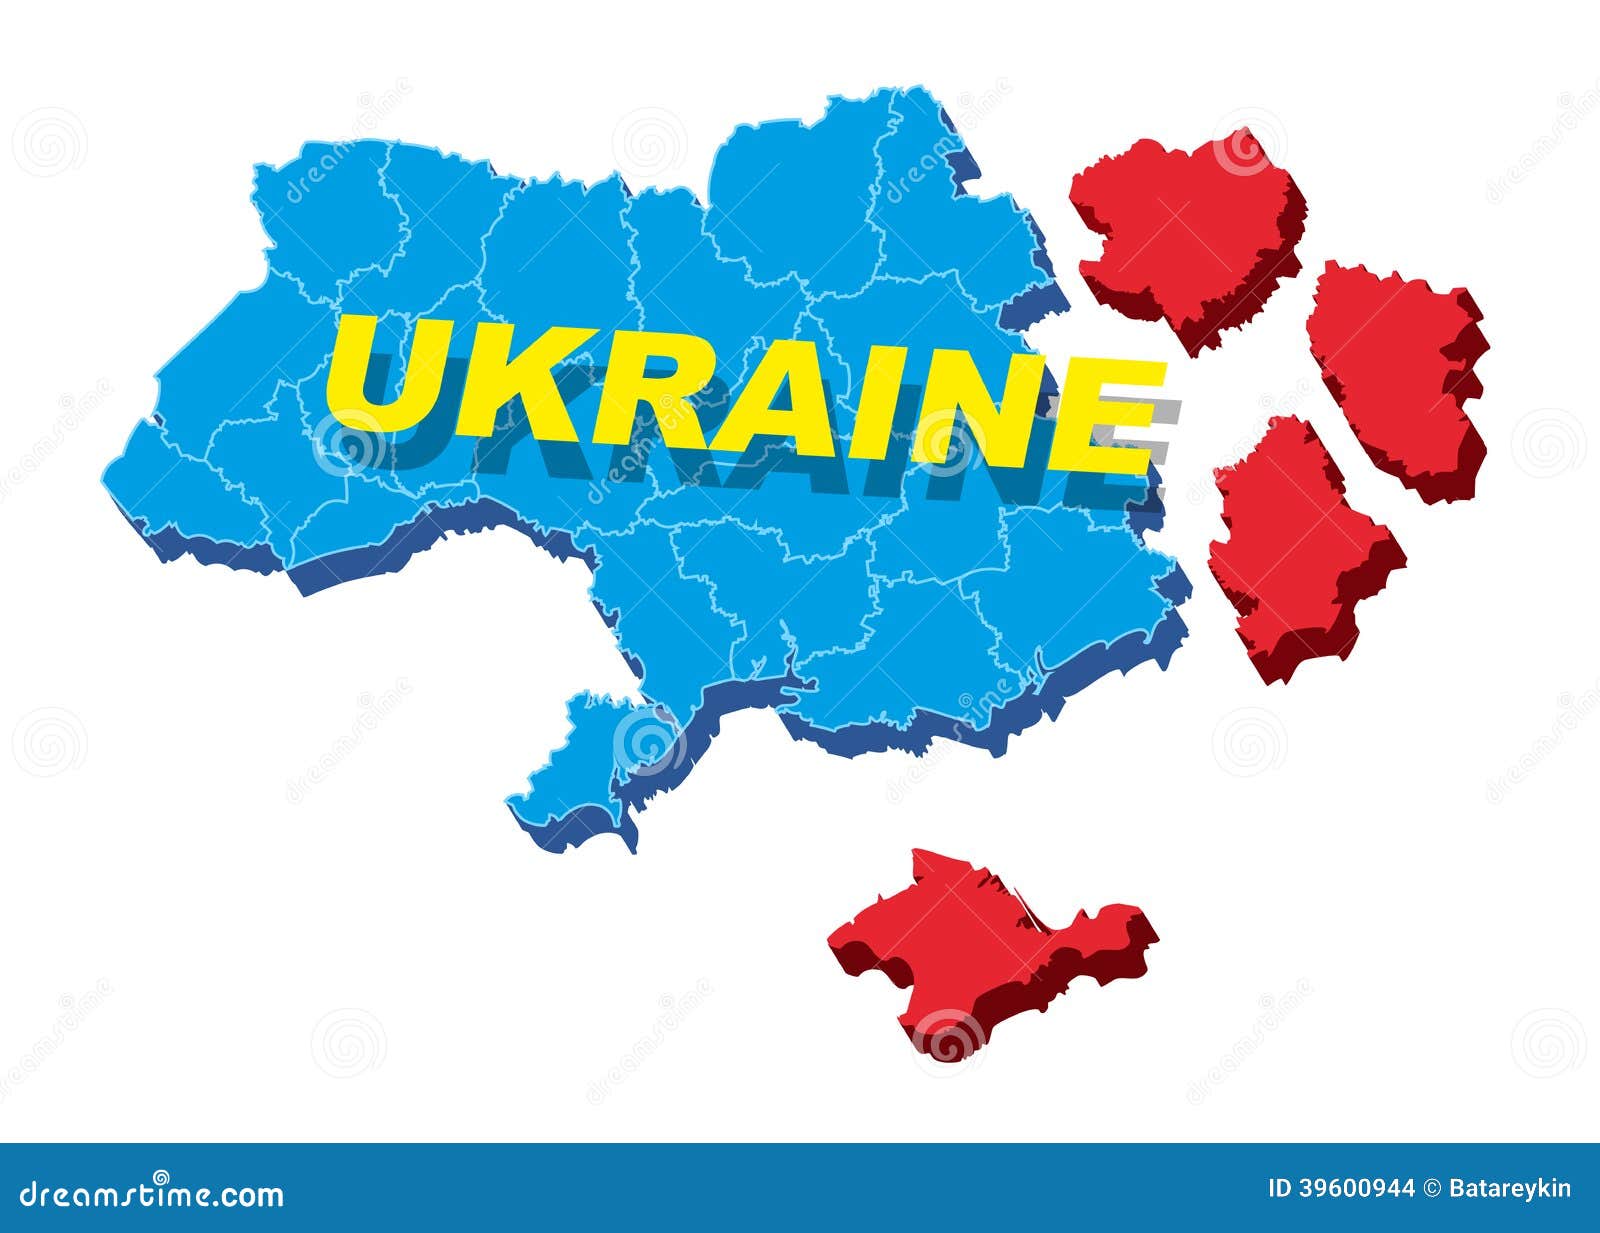 clipart map ukraine - photo #33